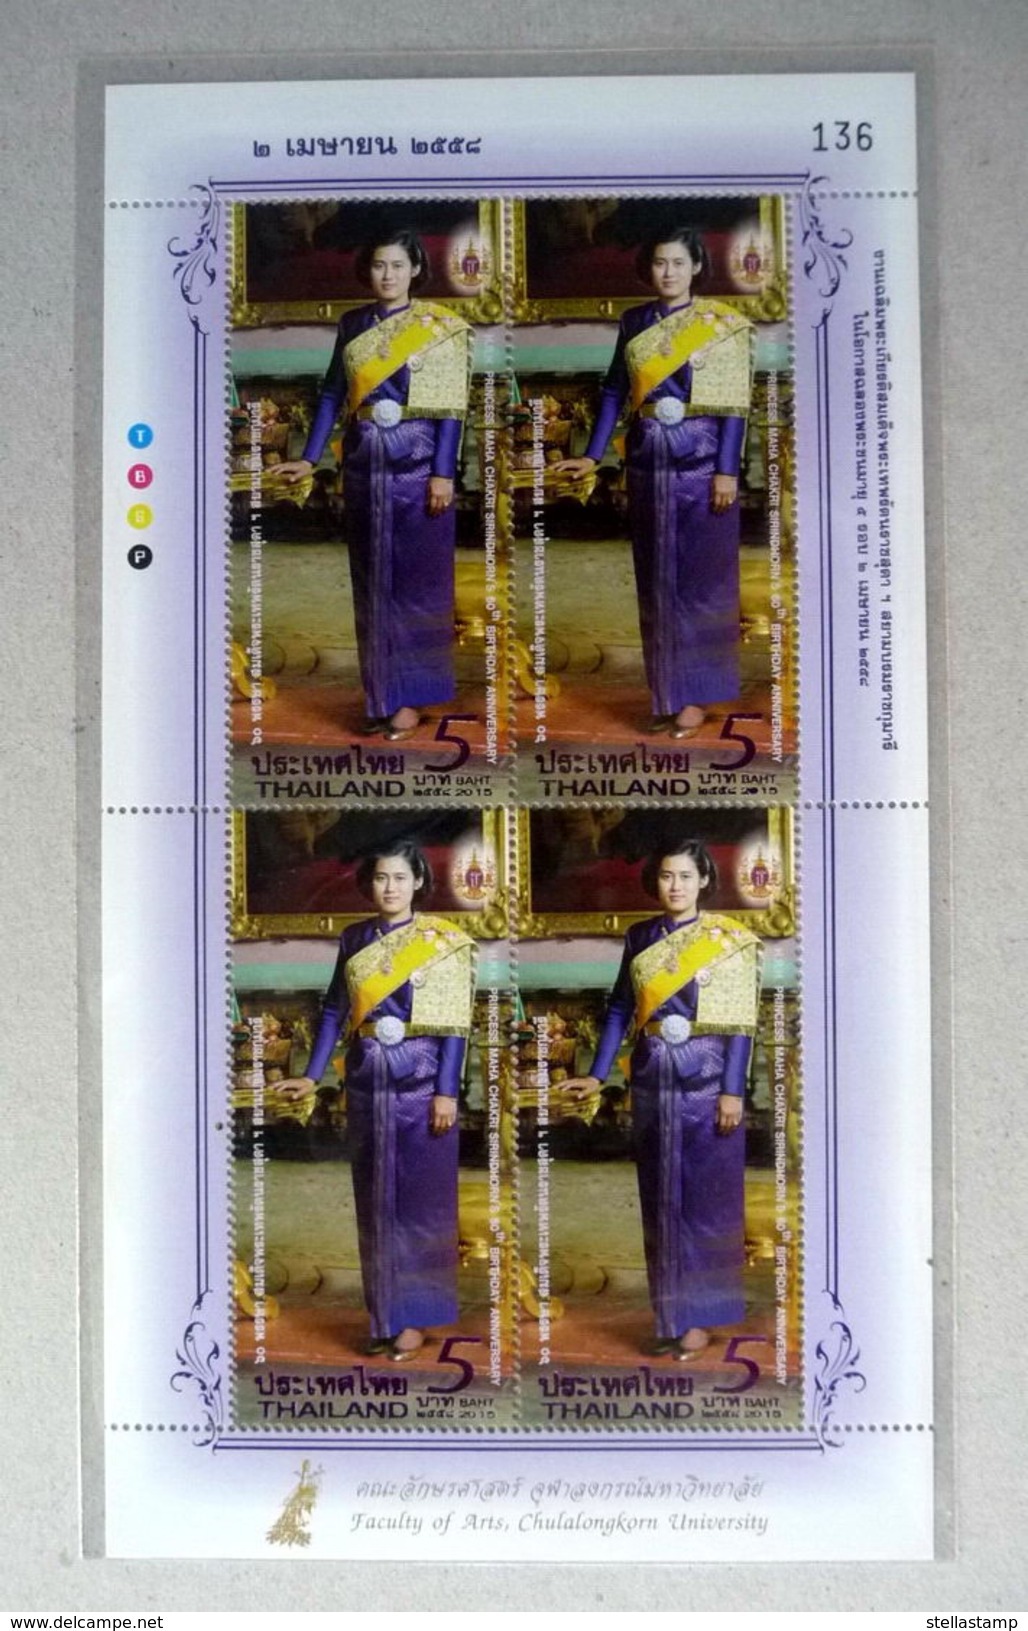 Thailand Stamp Overprint 2015 60th Birthday HRH Princess Maha Chakri Sirindhorn - Faculty Of Arts CHulalongkorn #5 - Thailand